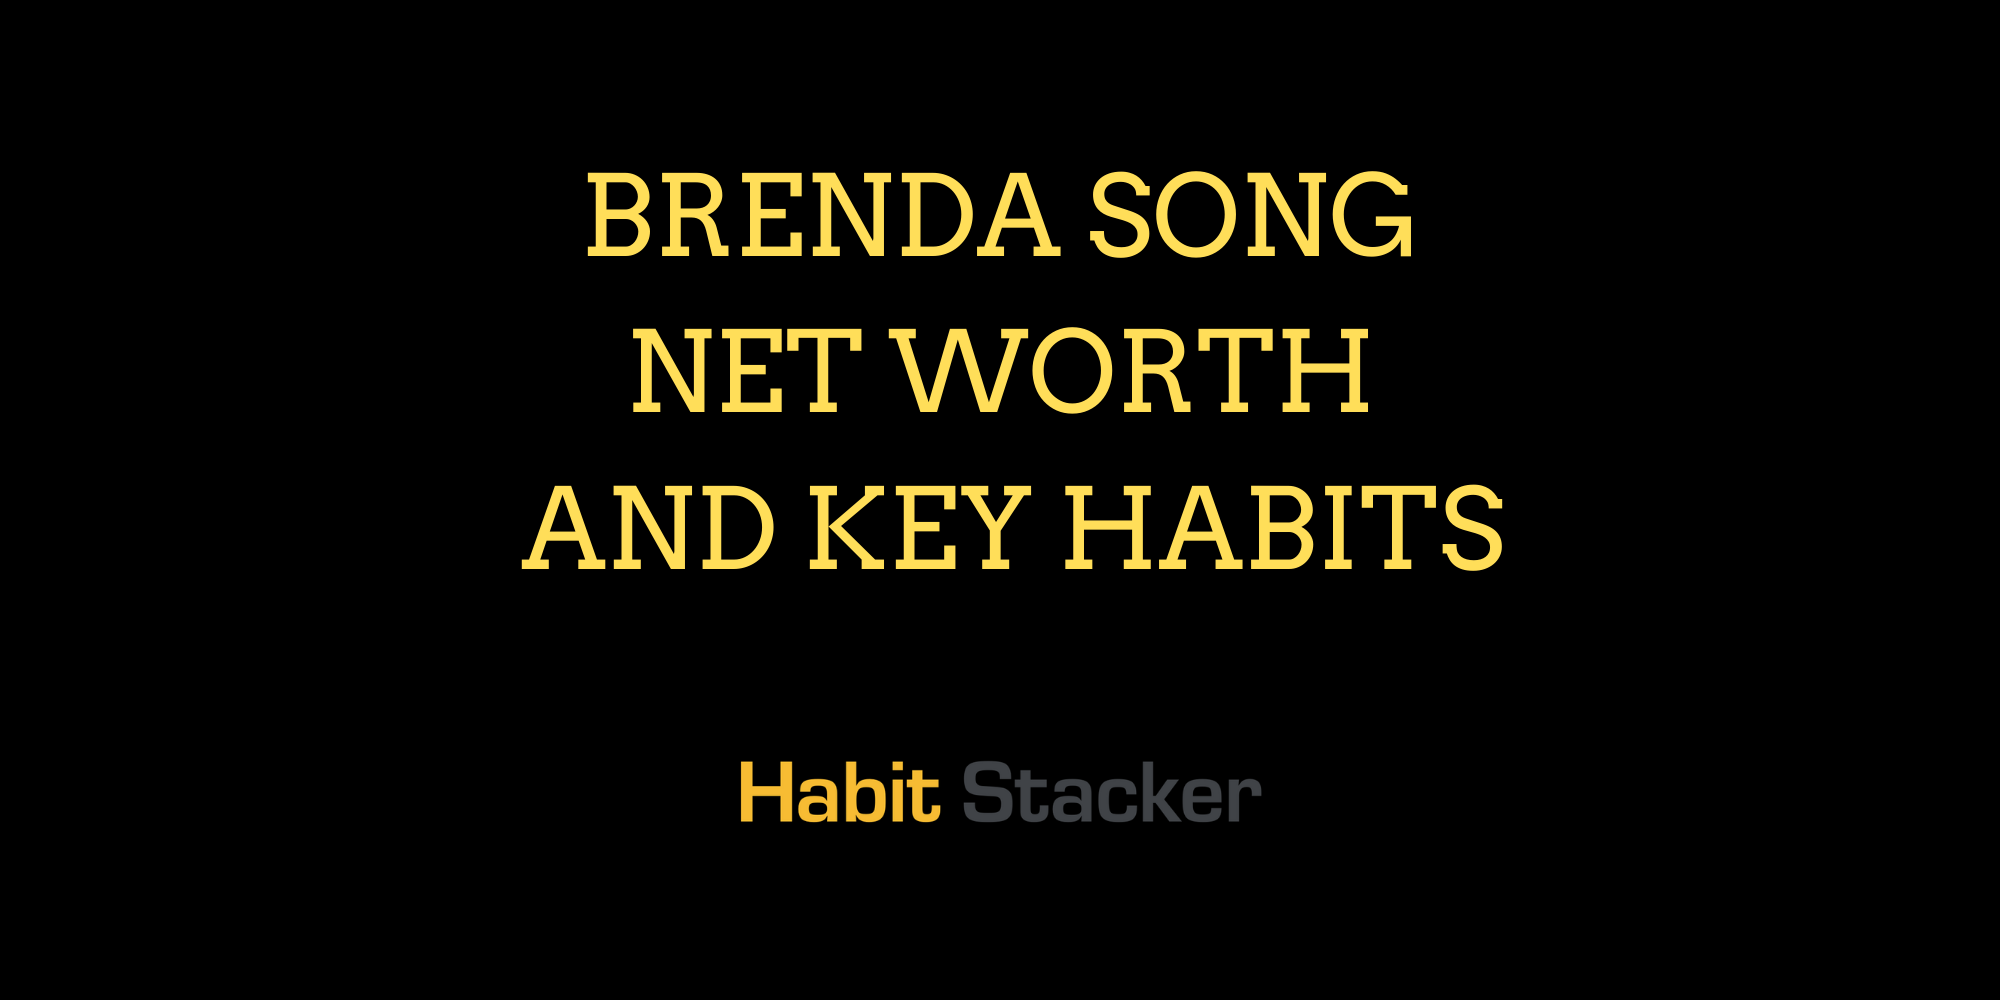 Brenda Song Net Worth and Key Habits